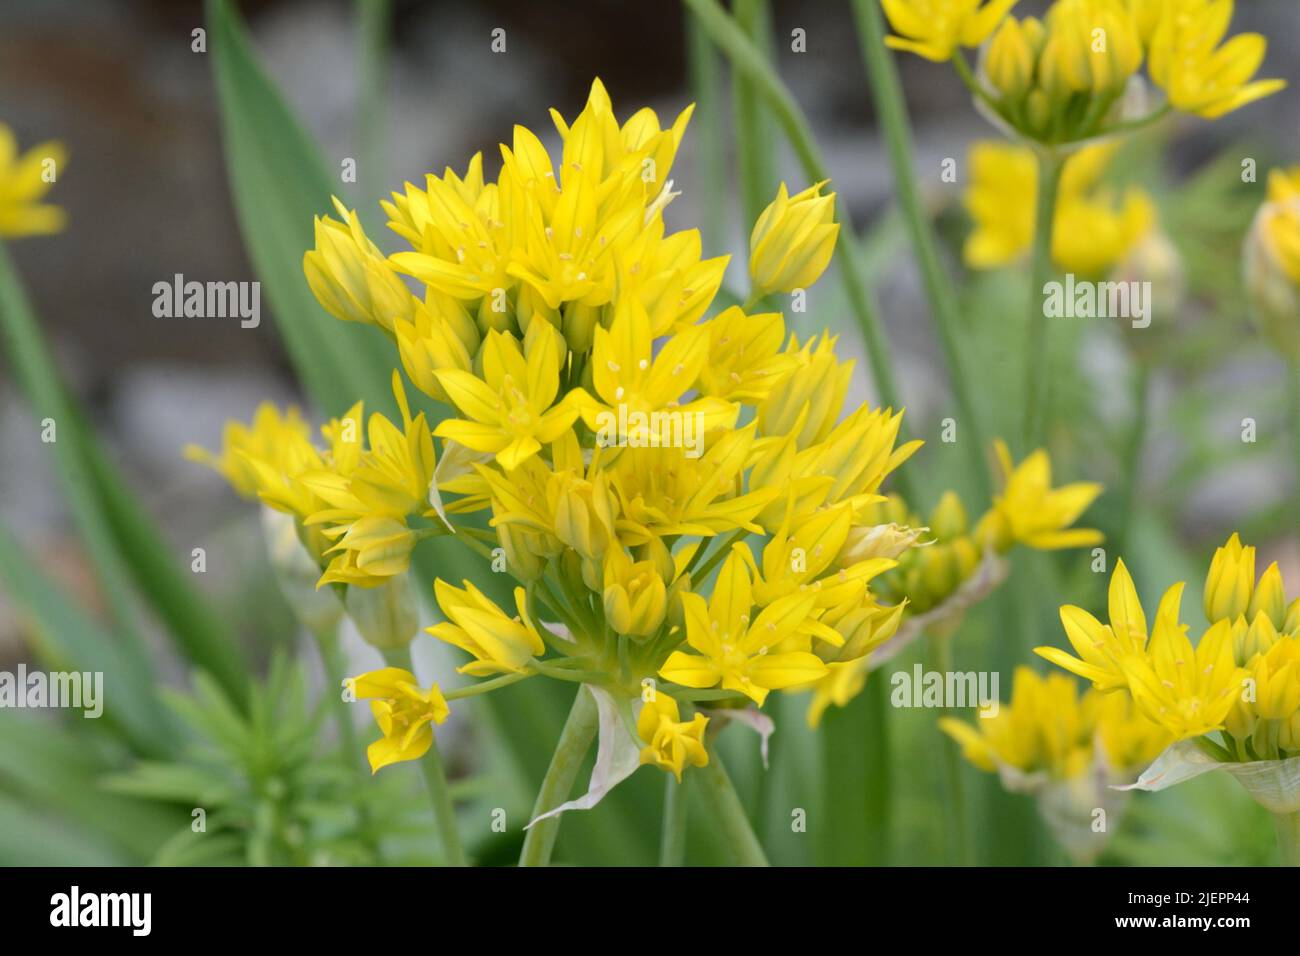 Allium Moly Golden Garlic Yellow garlic flowers Stock Photo